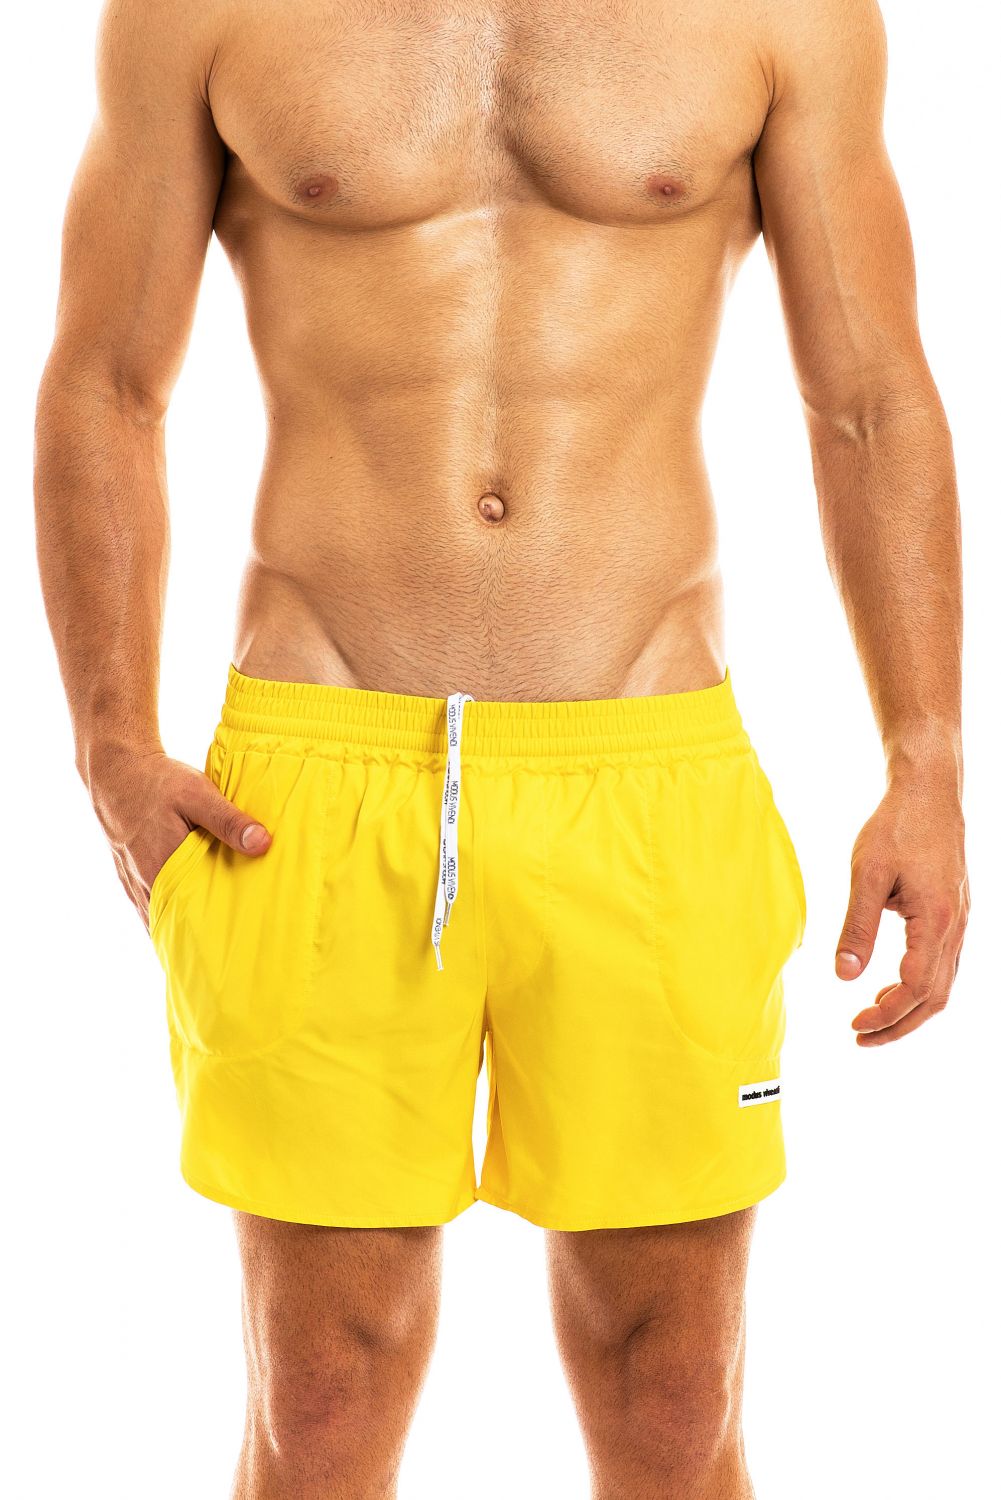 Modus Vivendi Capsule swimwear short yellow | men's underwear HerMan's